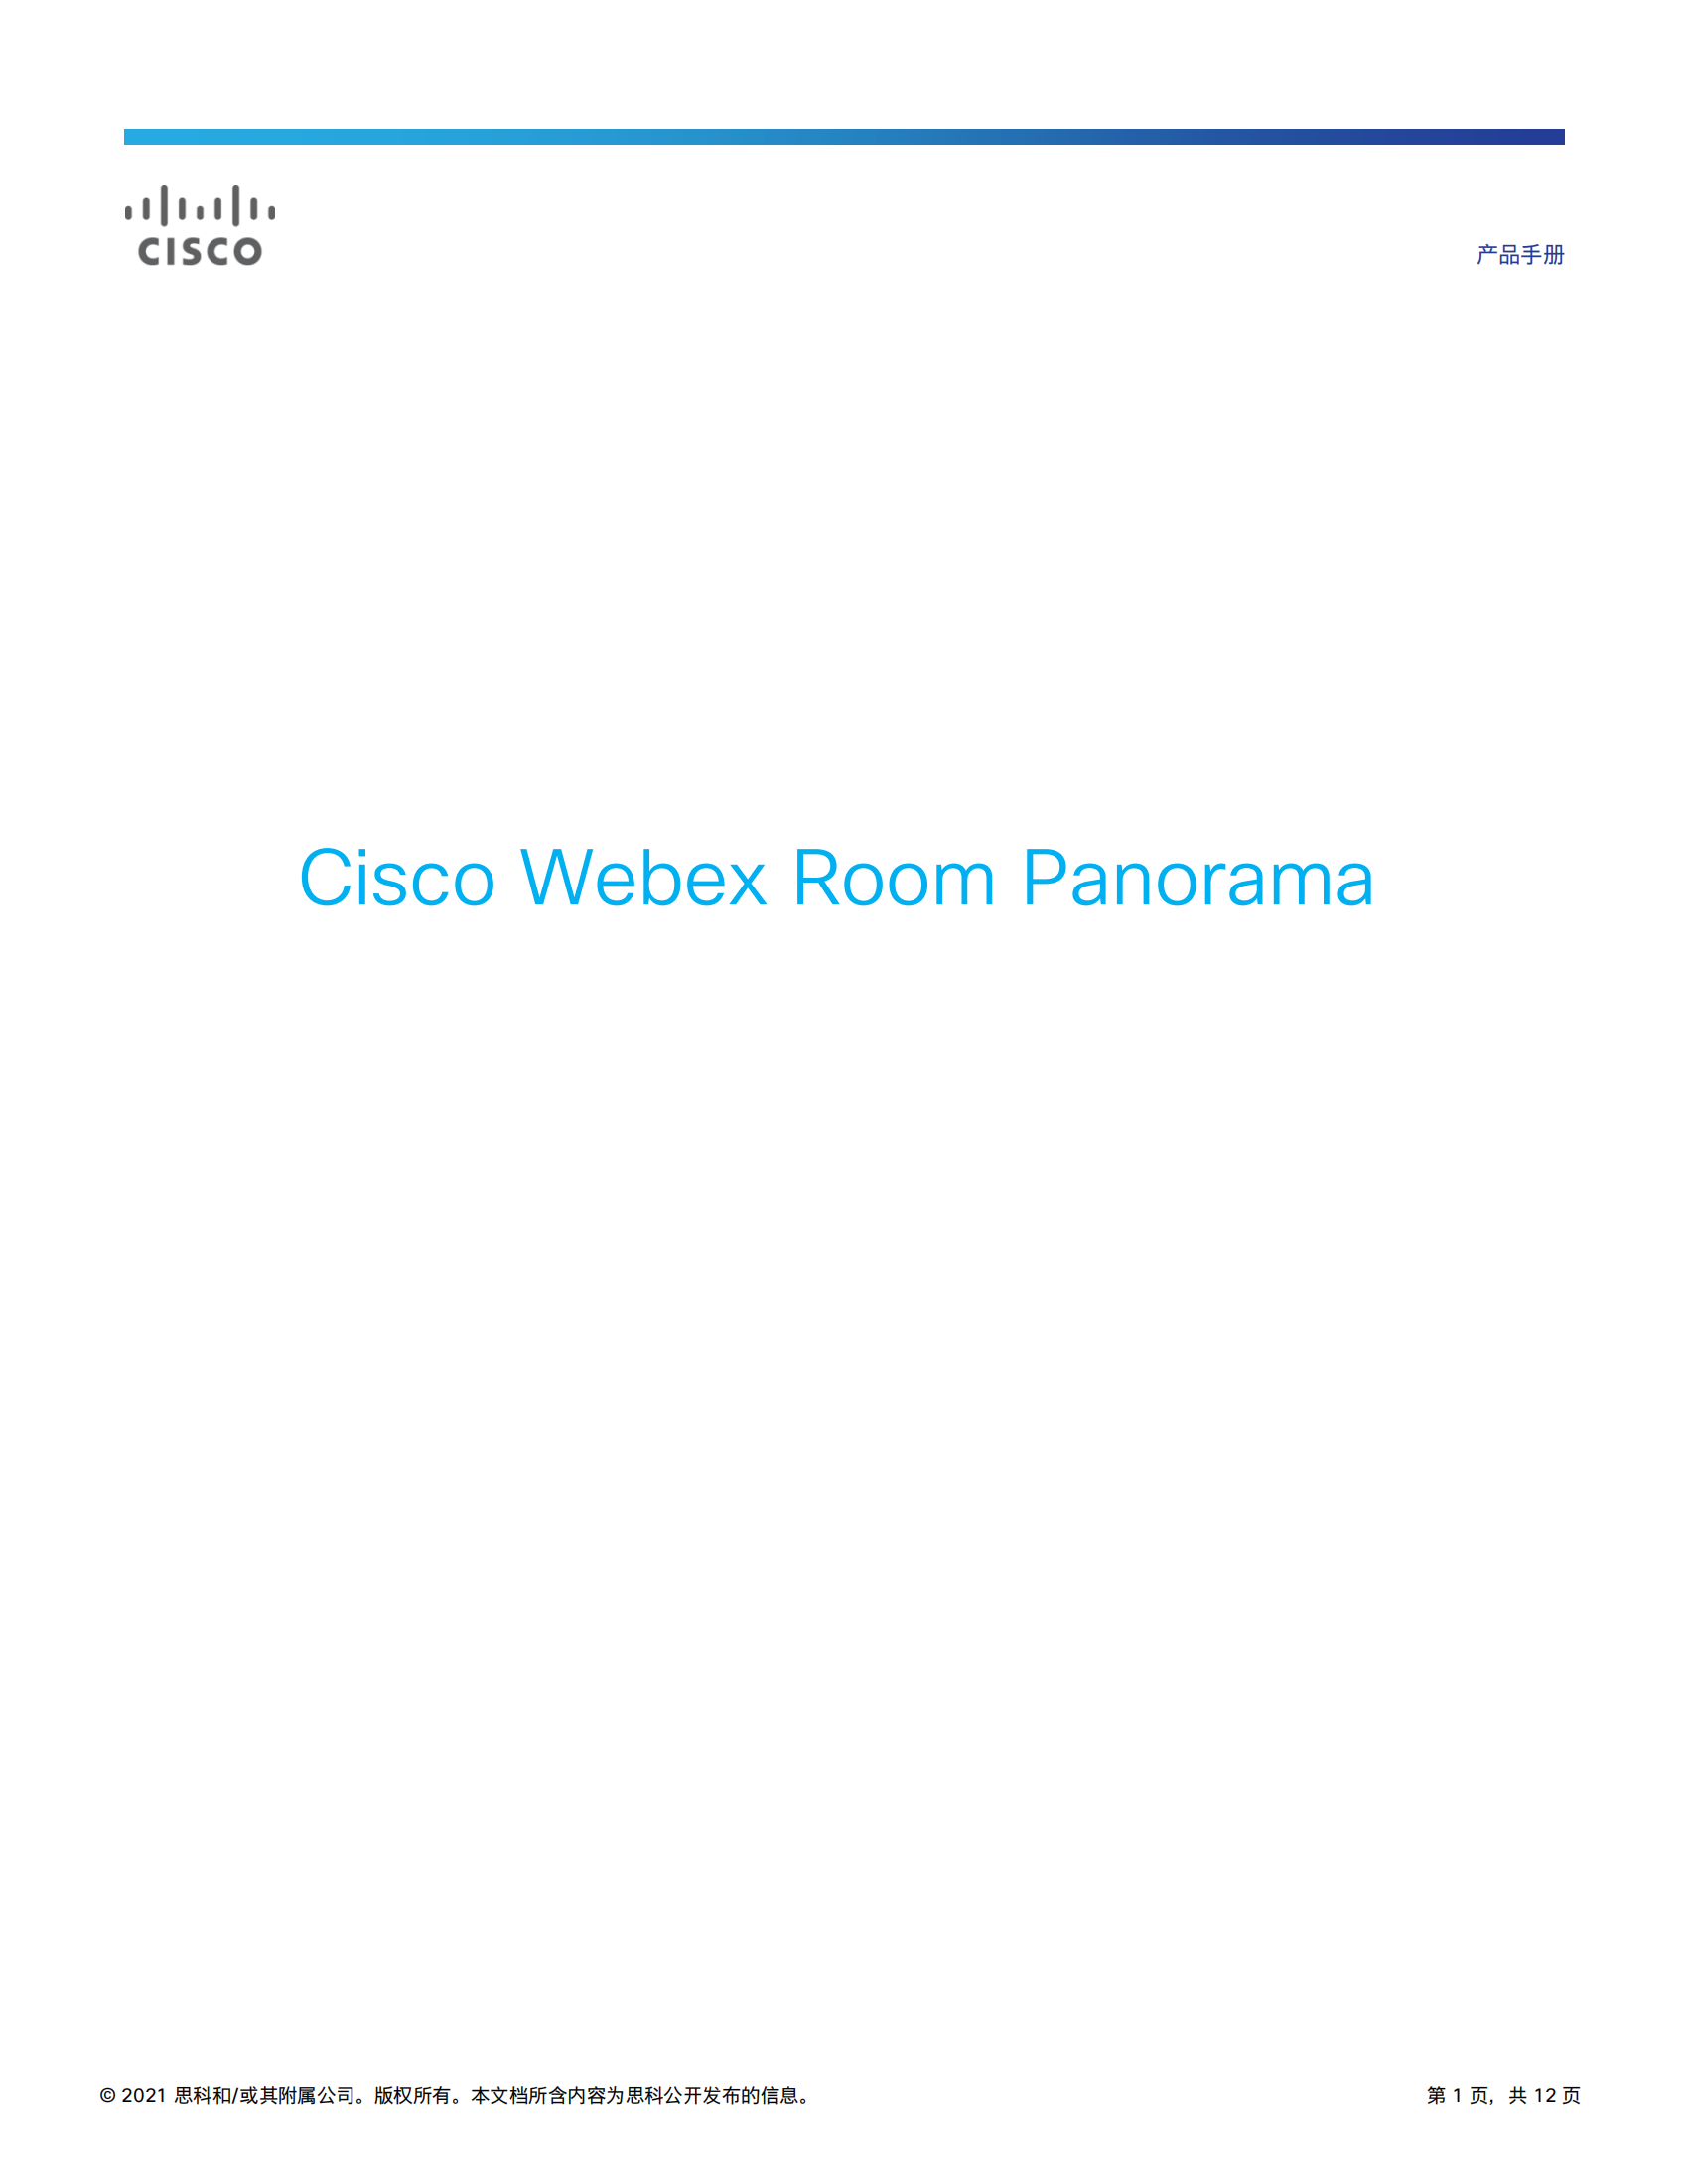 cisco-webex-room-panorama-data-sheet_00.png